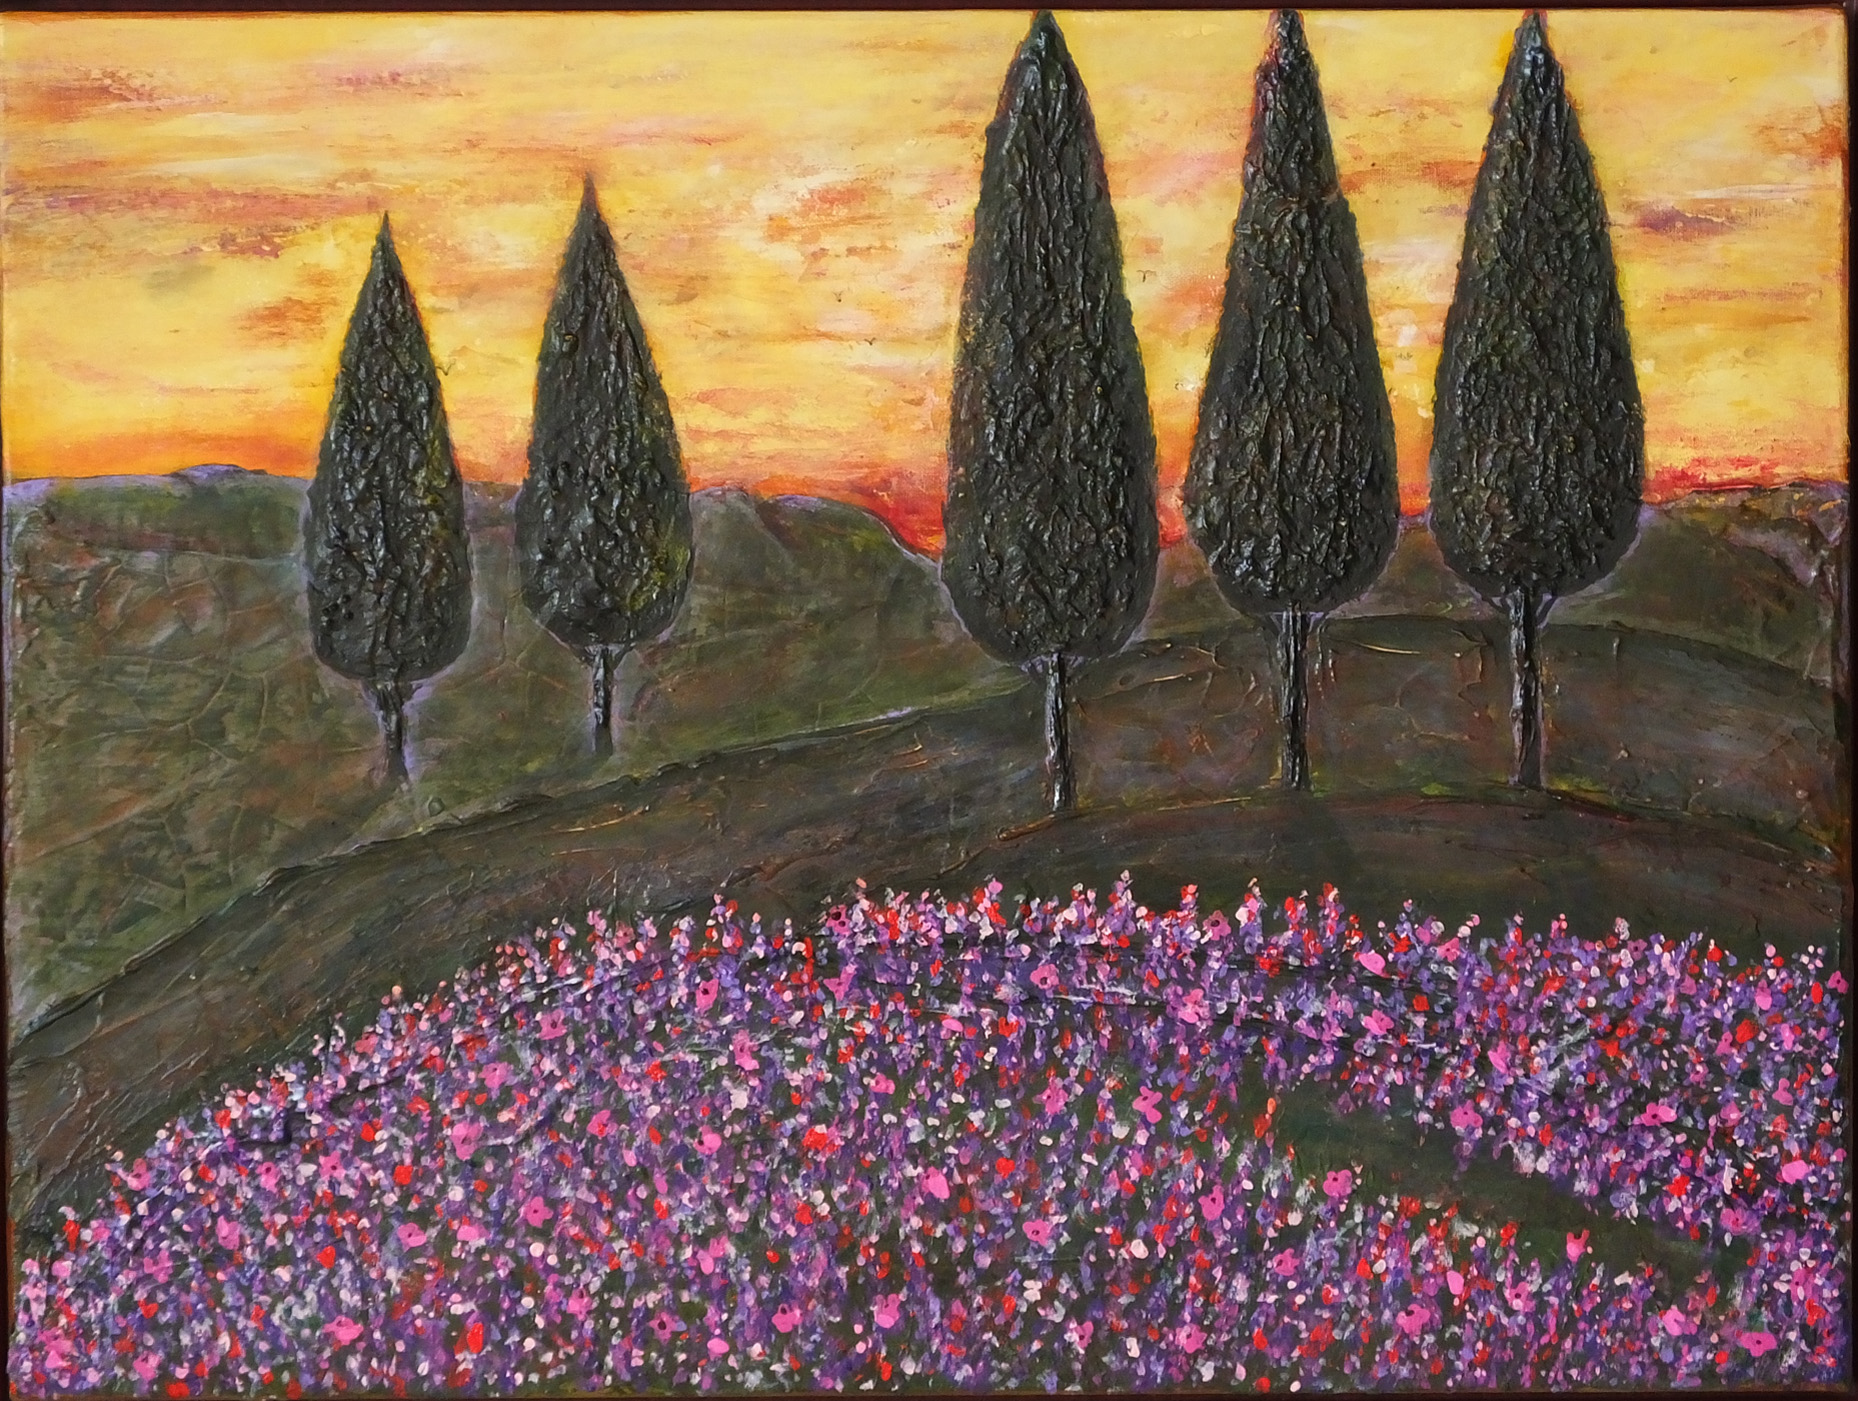 Painting: Tuscany by Lynda Pogue